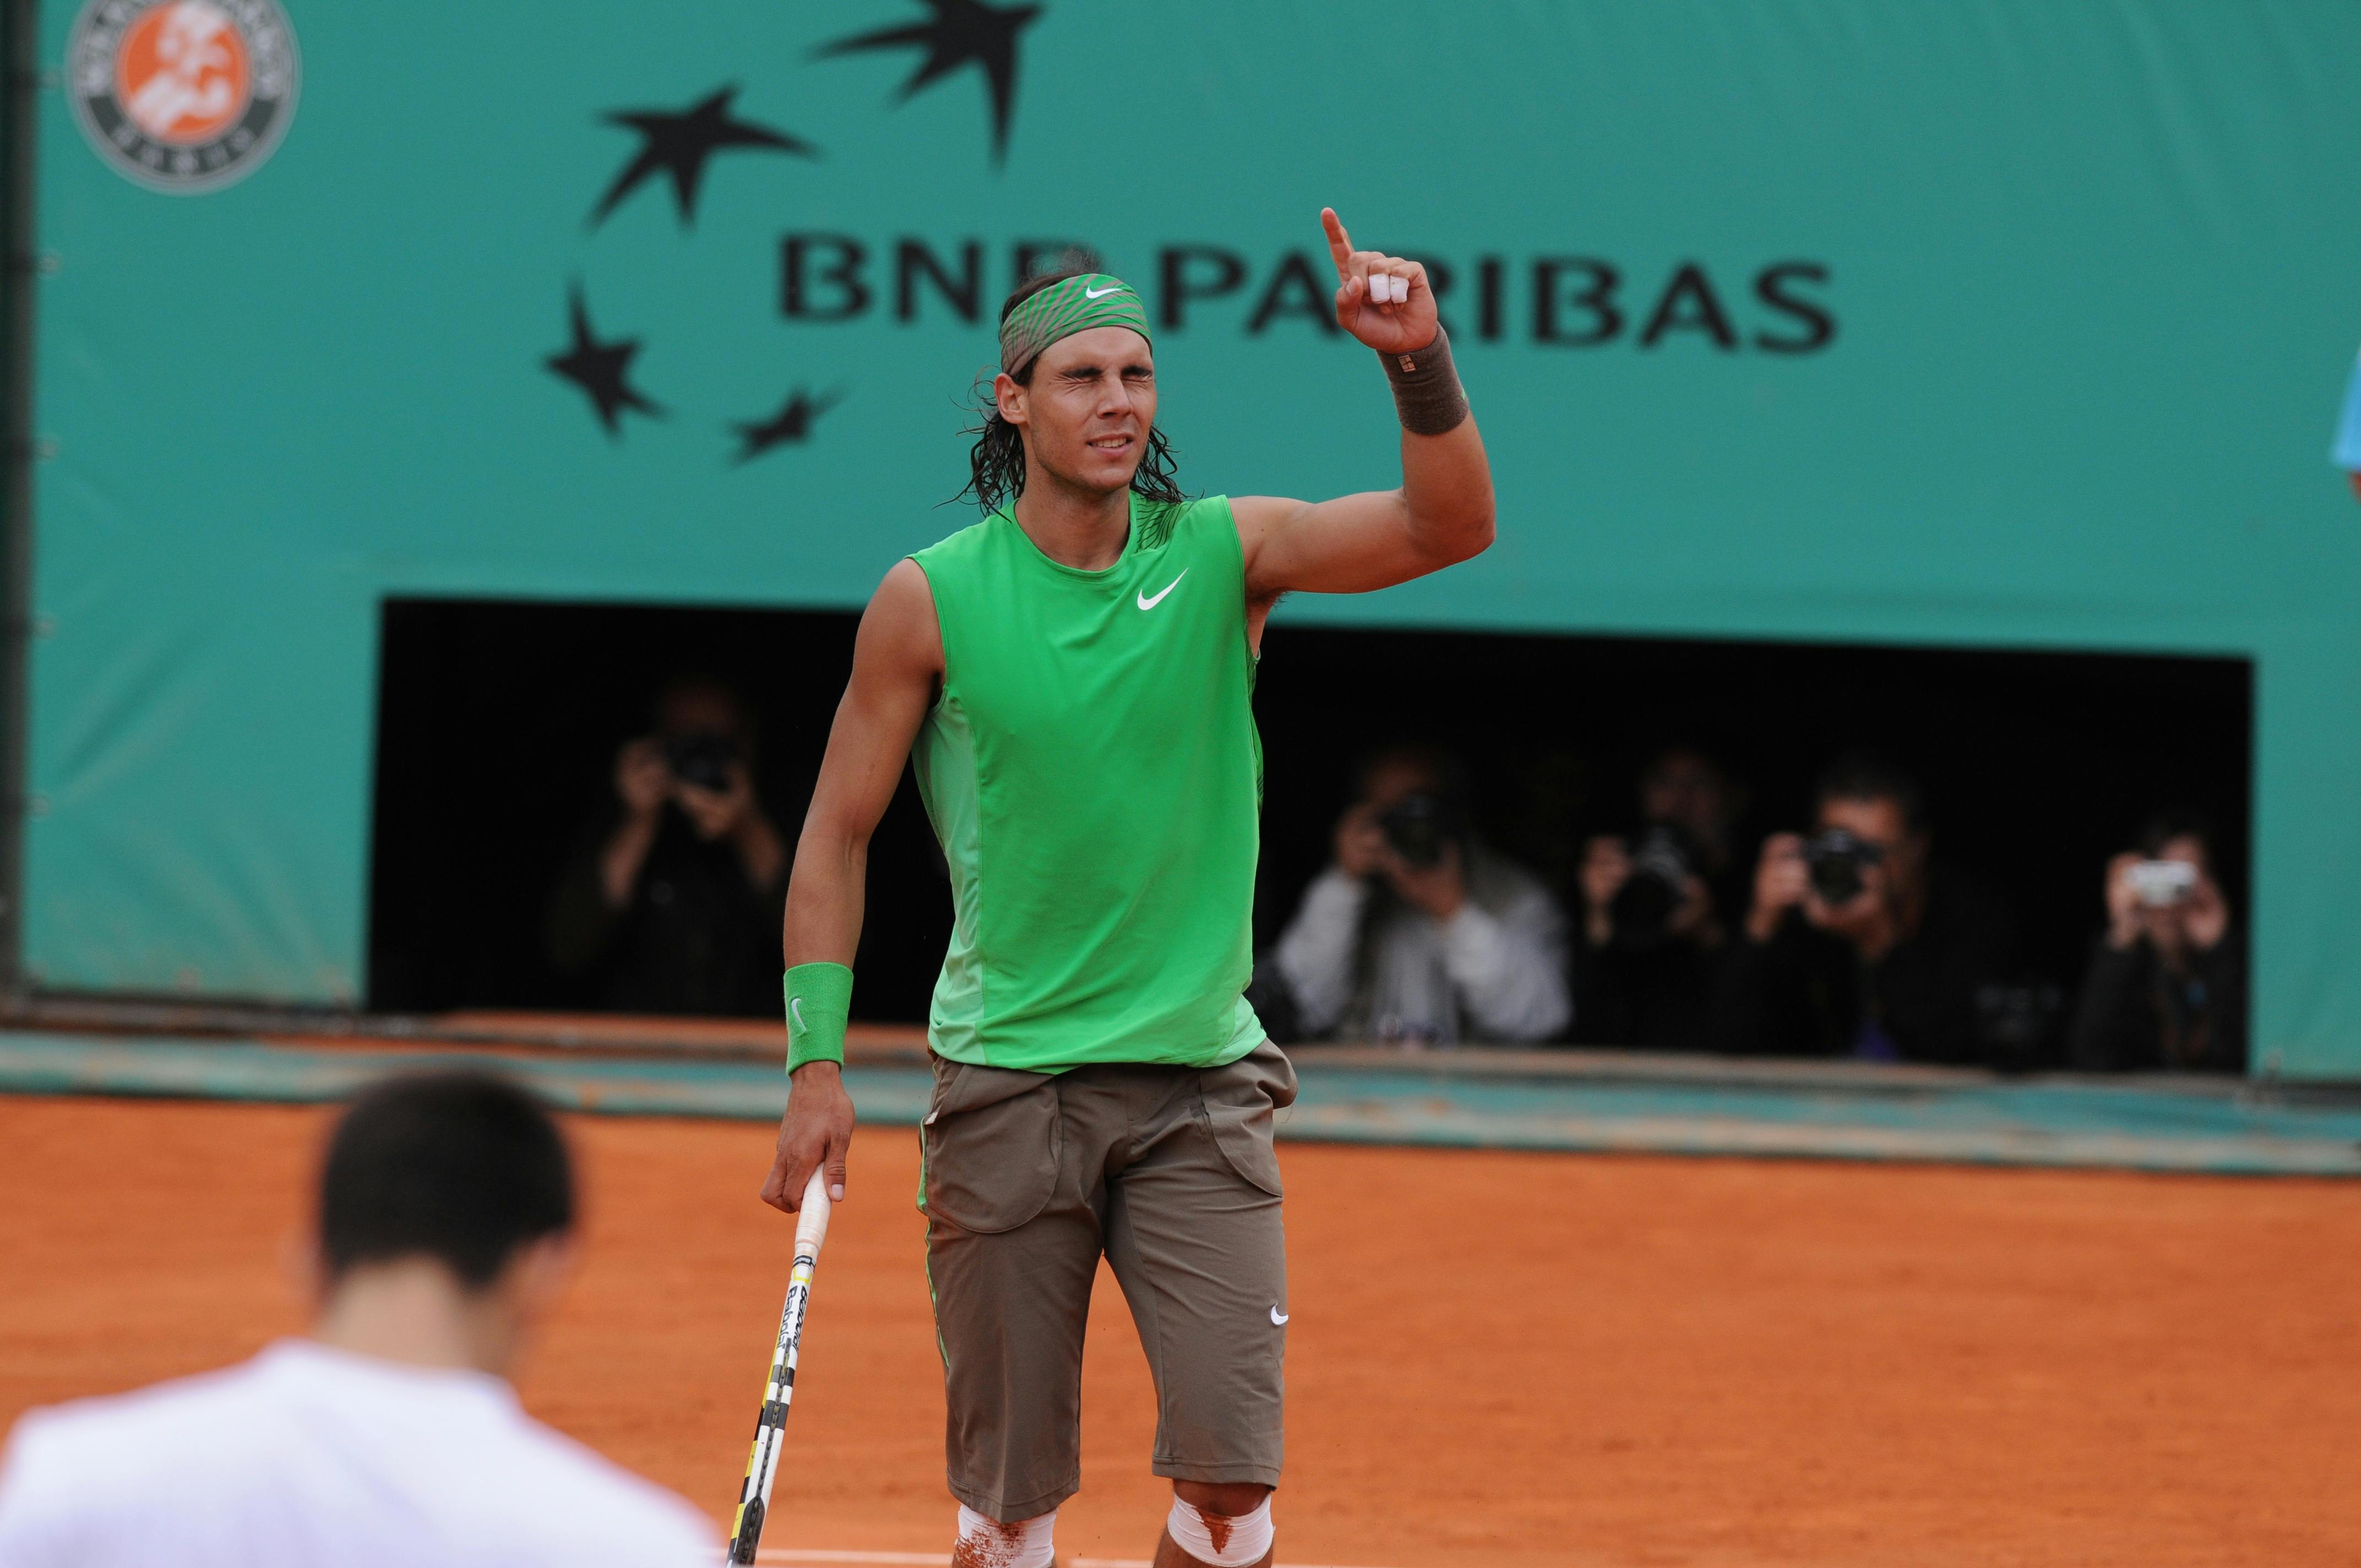 Rafael Nadal, Roland Garros 2008 semi-final